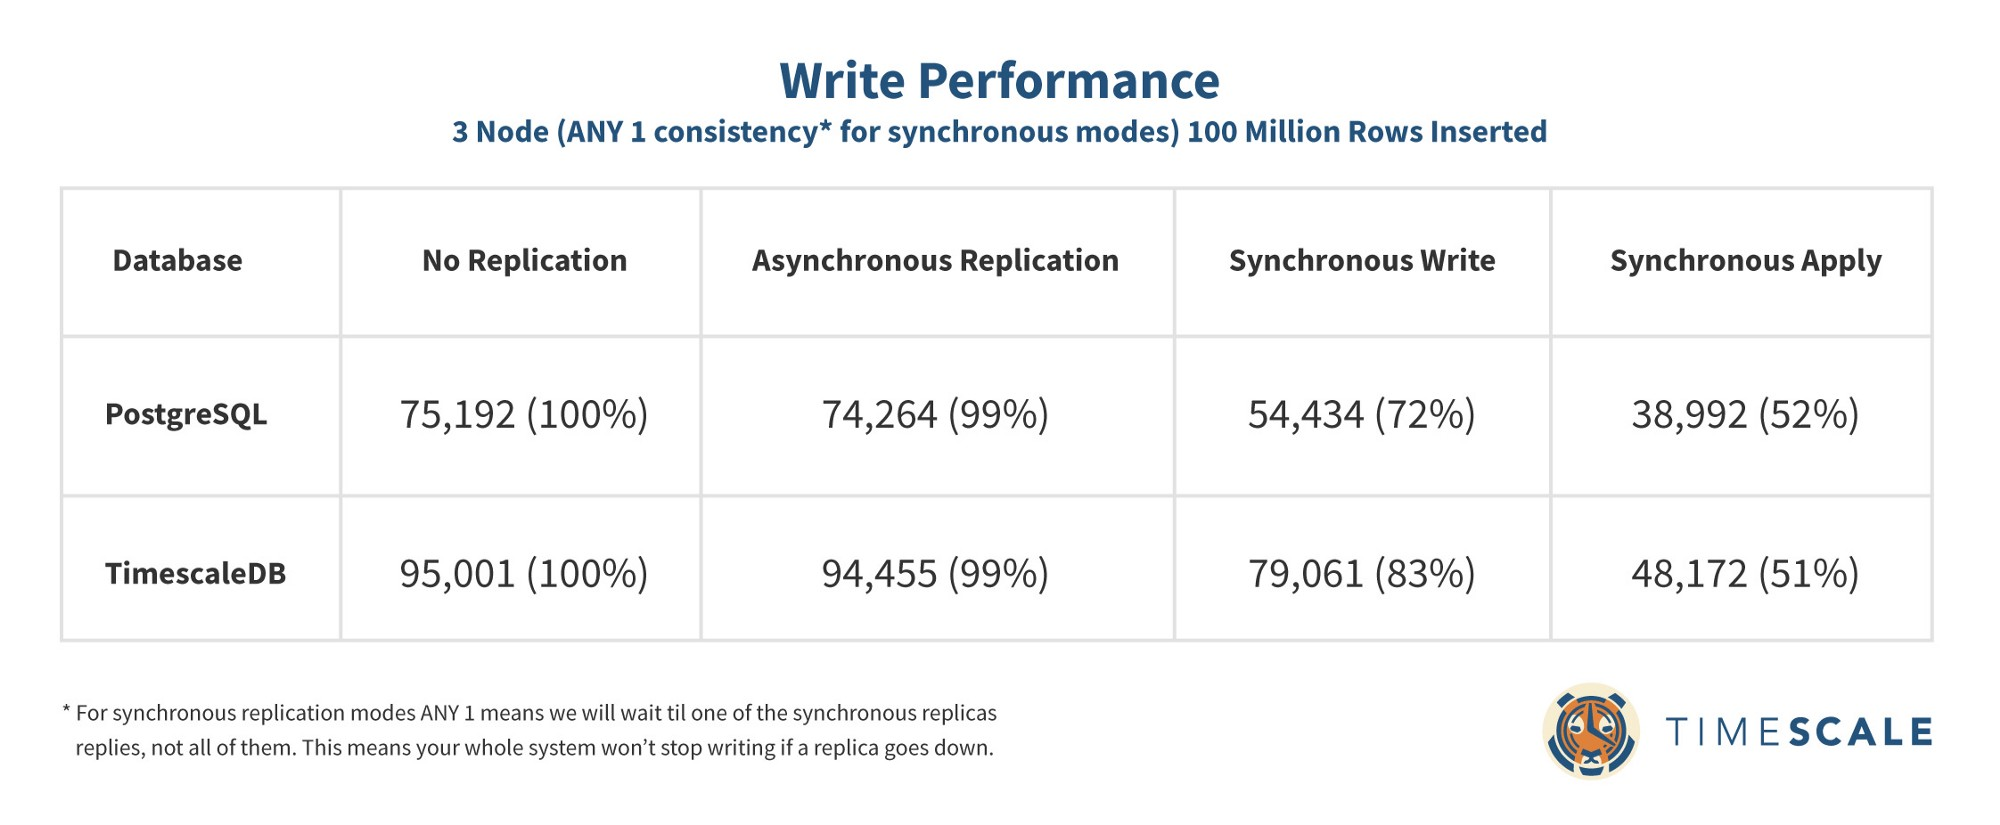 A table comparing the write performance of PostgreSQL vs. TimescaleDB